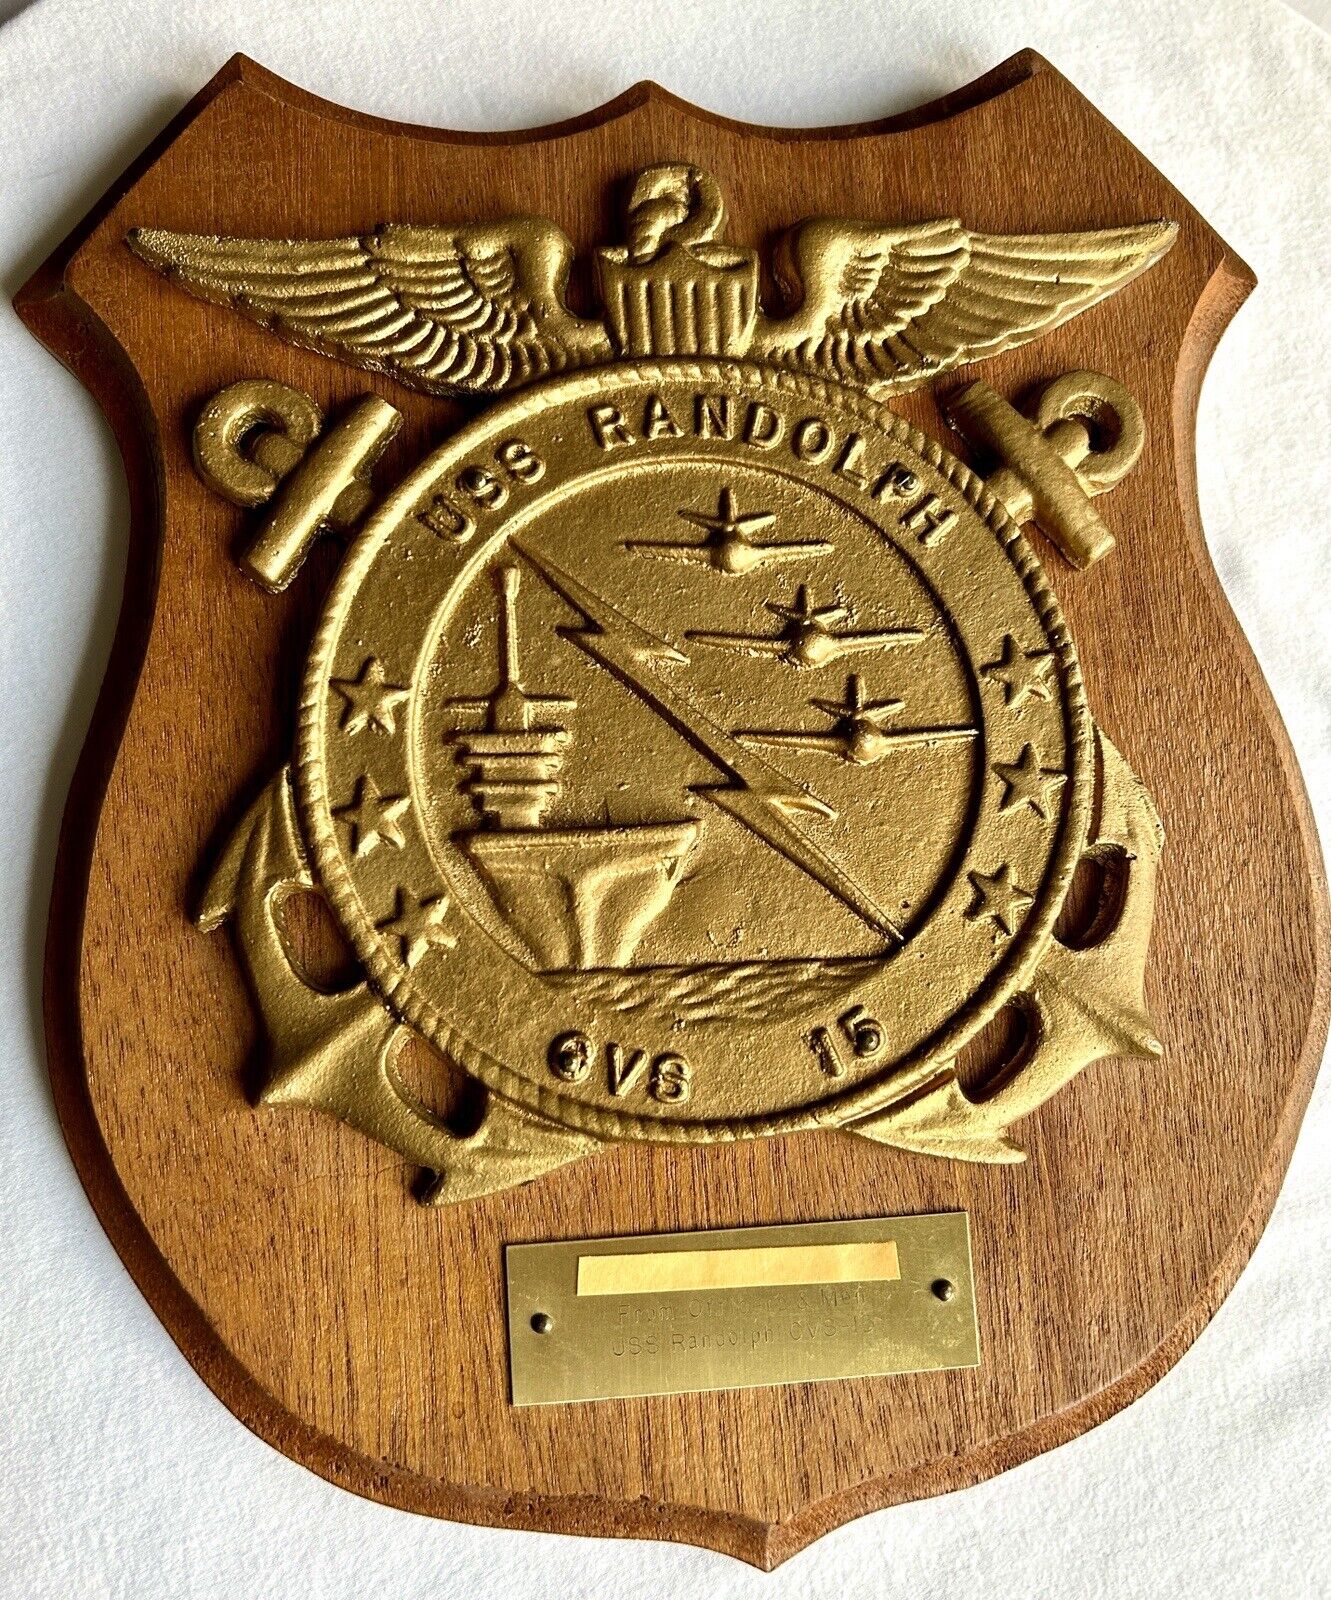 Lg, Heavy Antique USS Randolph Cast Brass Presentation Plaque, US Navy, 1960s